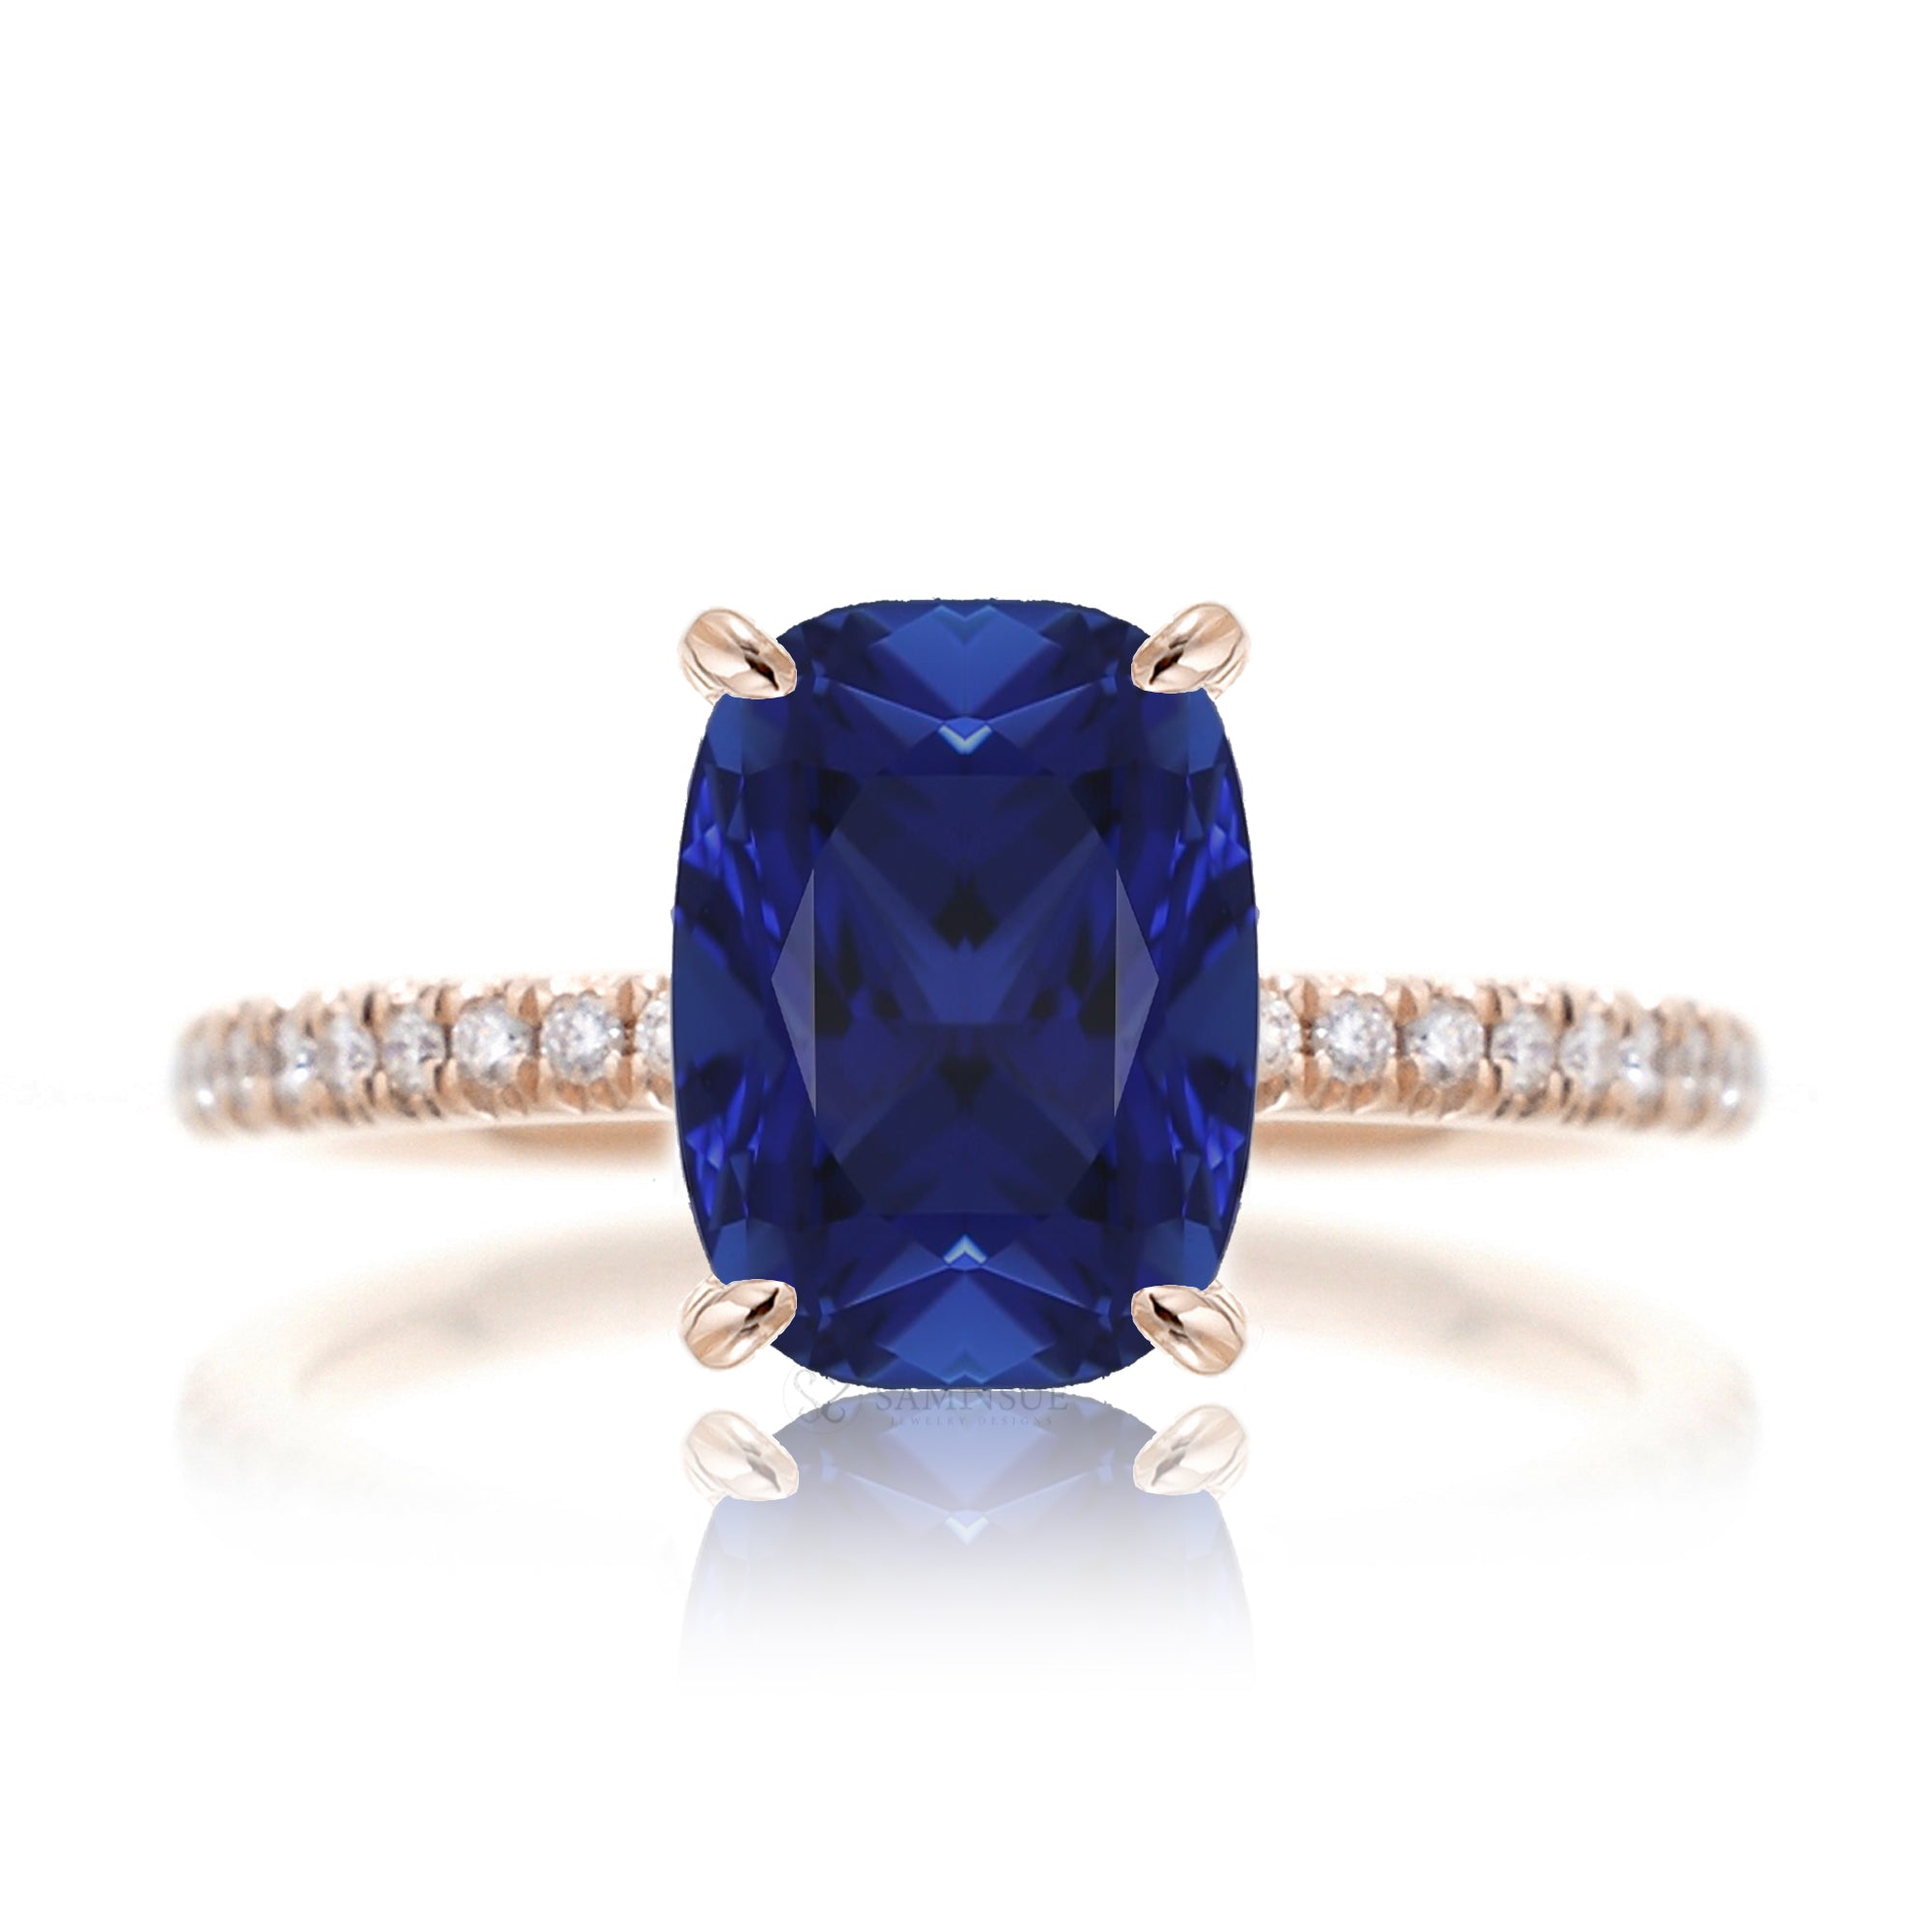 Cushion cut blue sapphire diamond engagement ring rose gold - the Ava